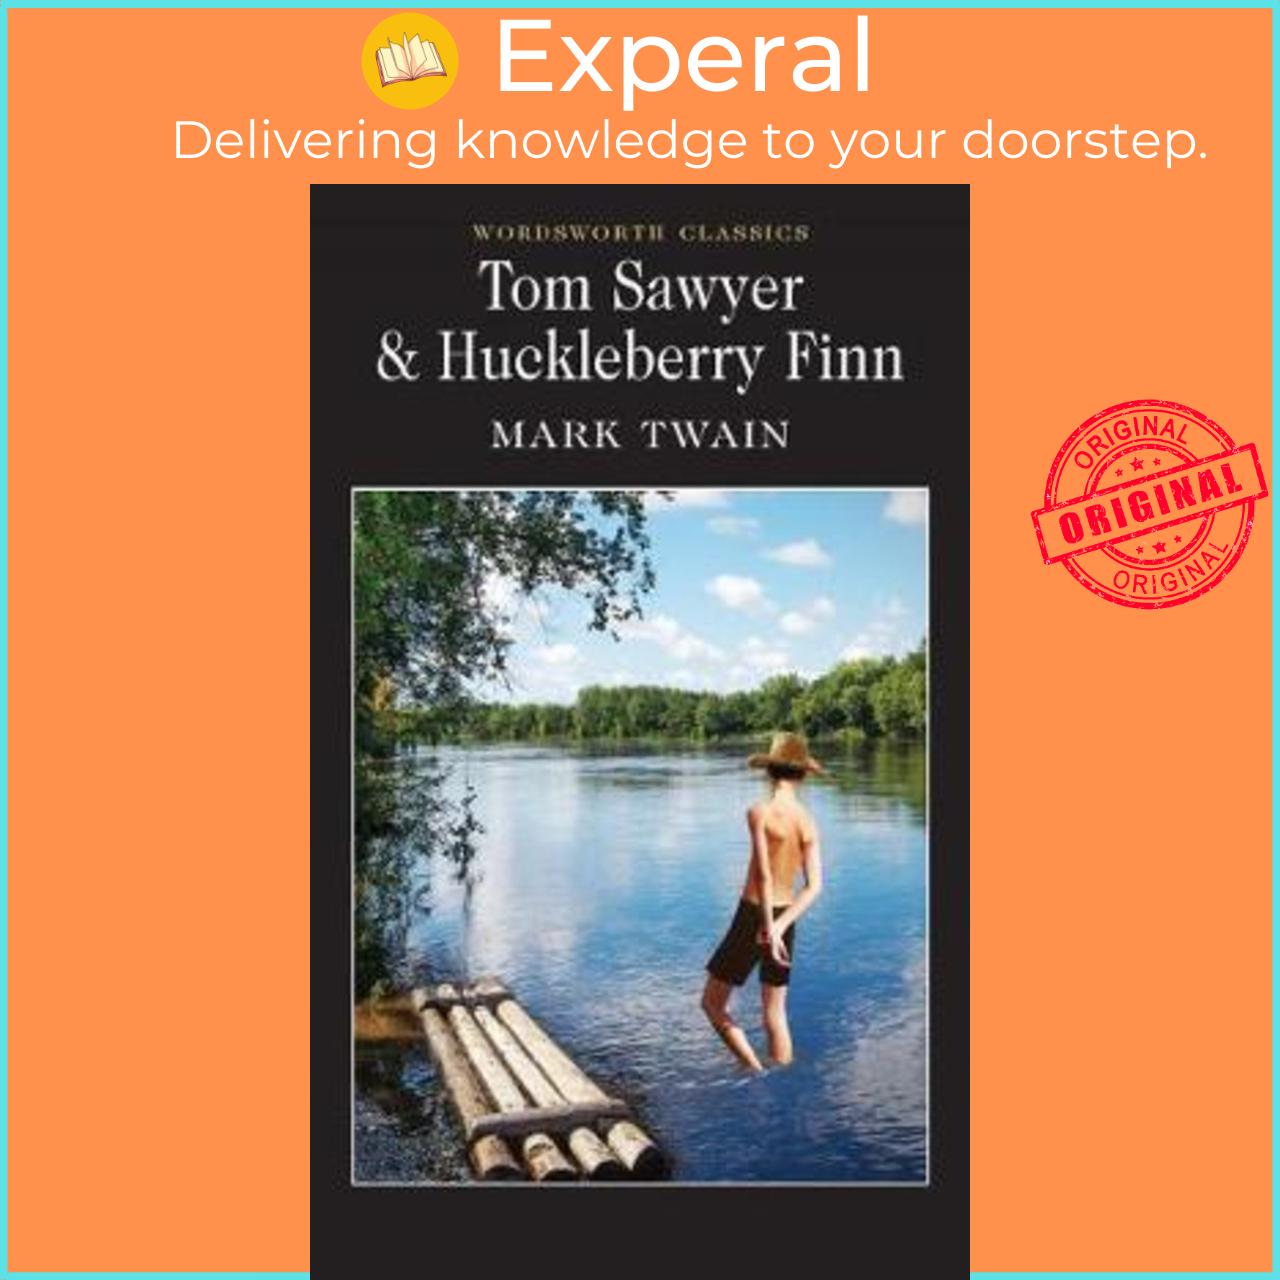 Sách - Tom Sawyer & Huckleberry Finn by Mark Twain (UK edition, paperback)